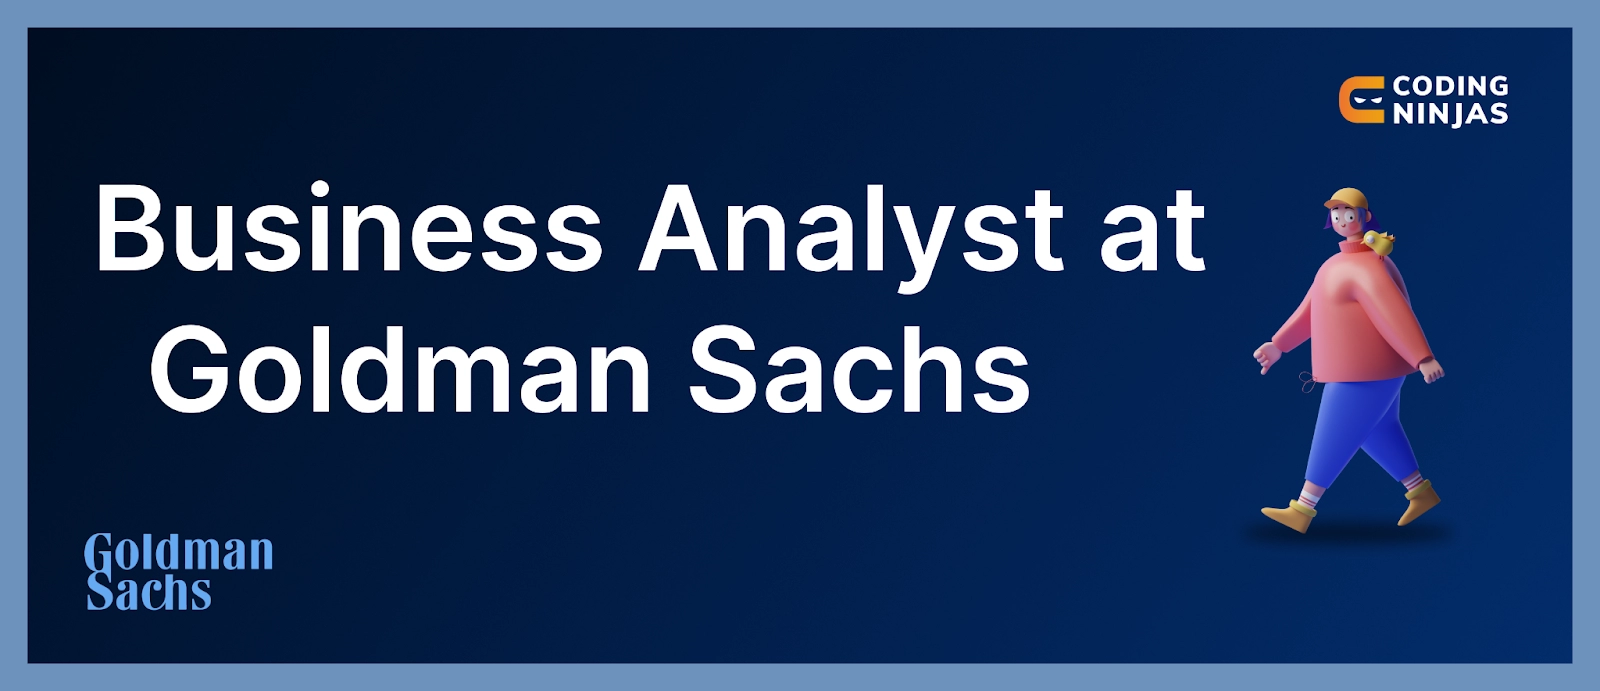 Business Analyst at Goldman Sachs Coding Ninjas